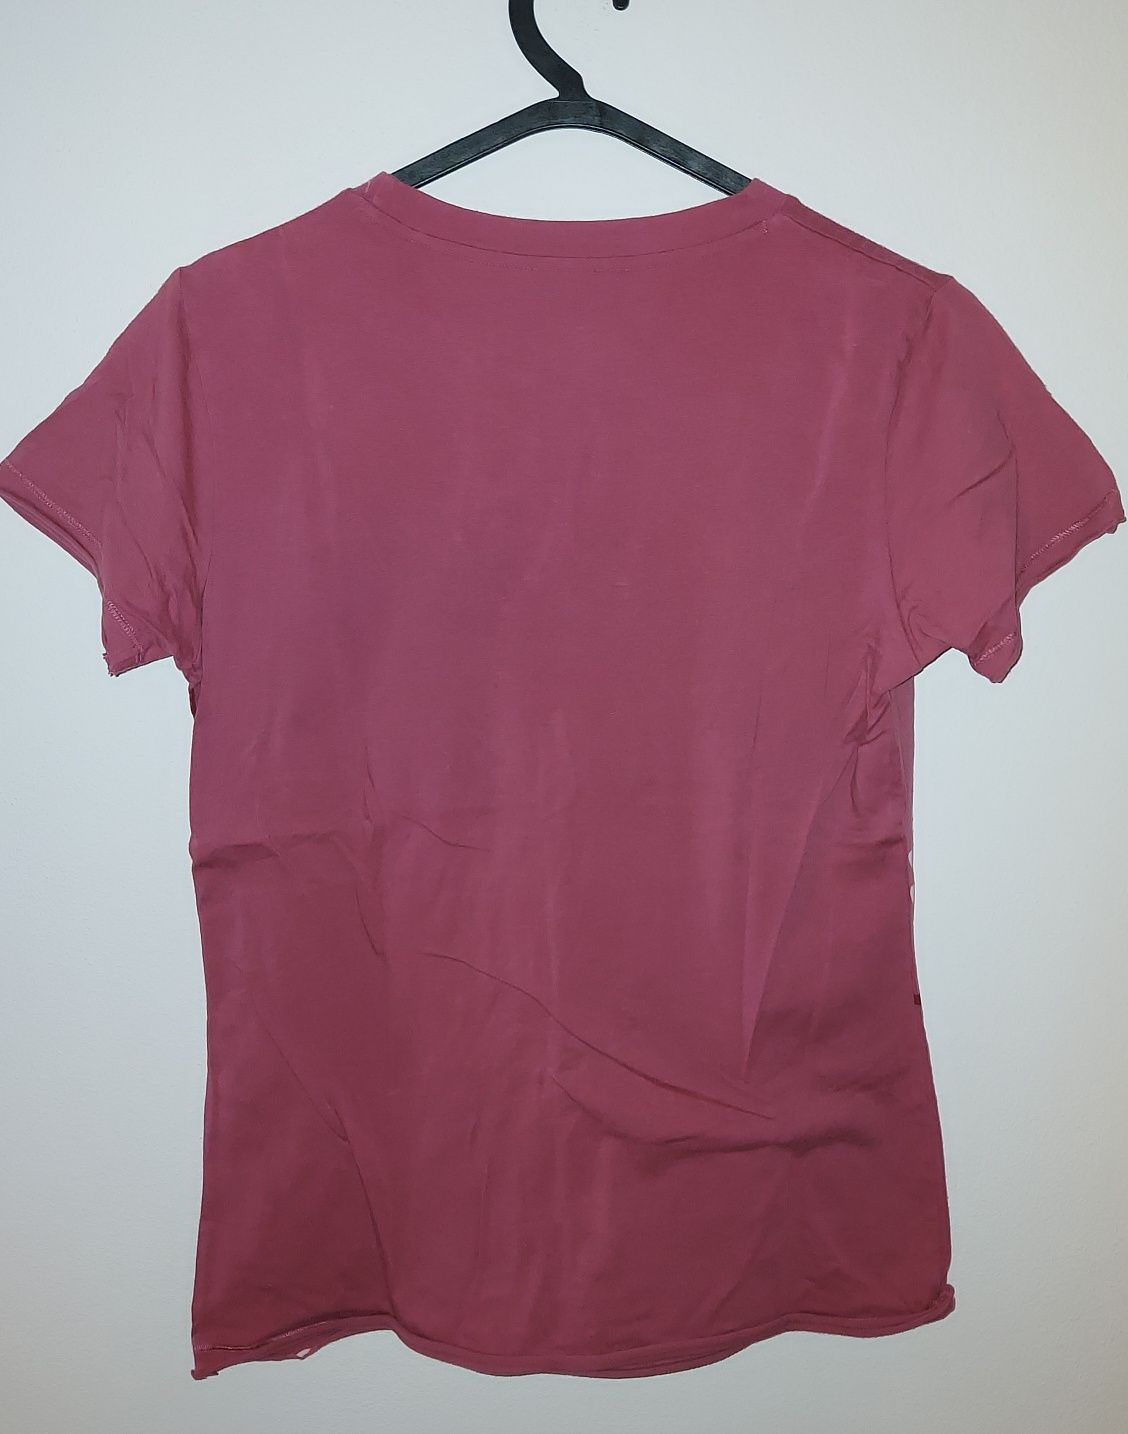 17€ T-shirt Red Oak tamanho XL, mas veste L